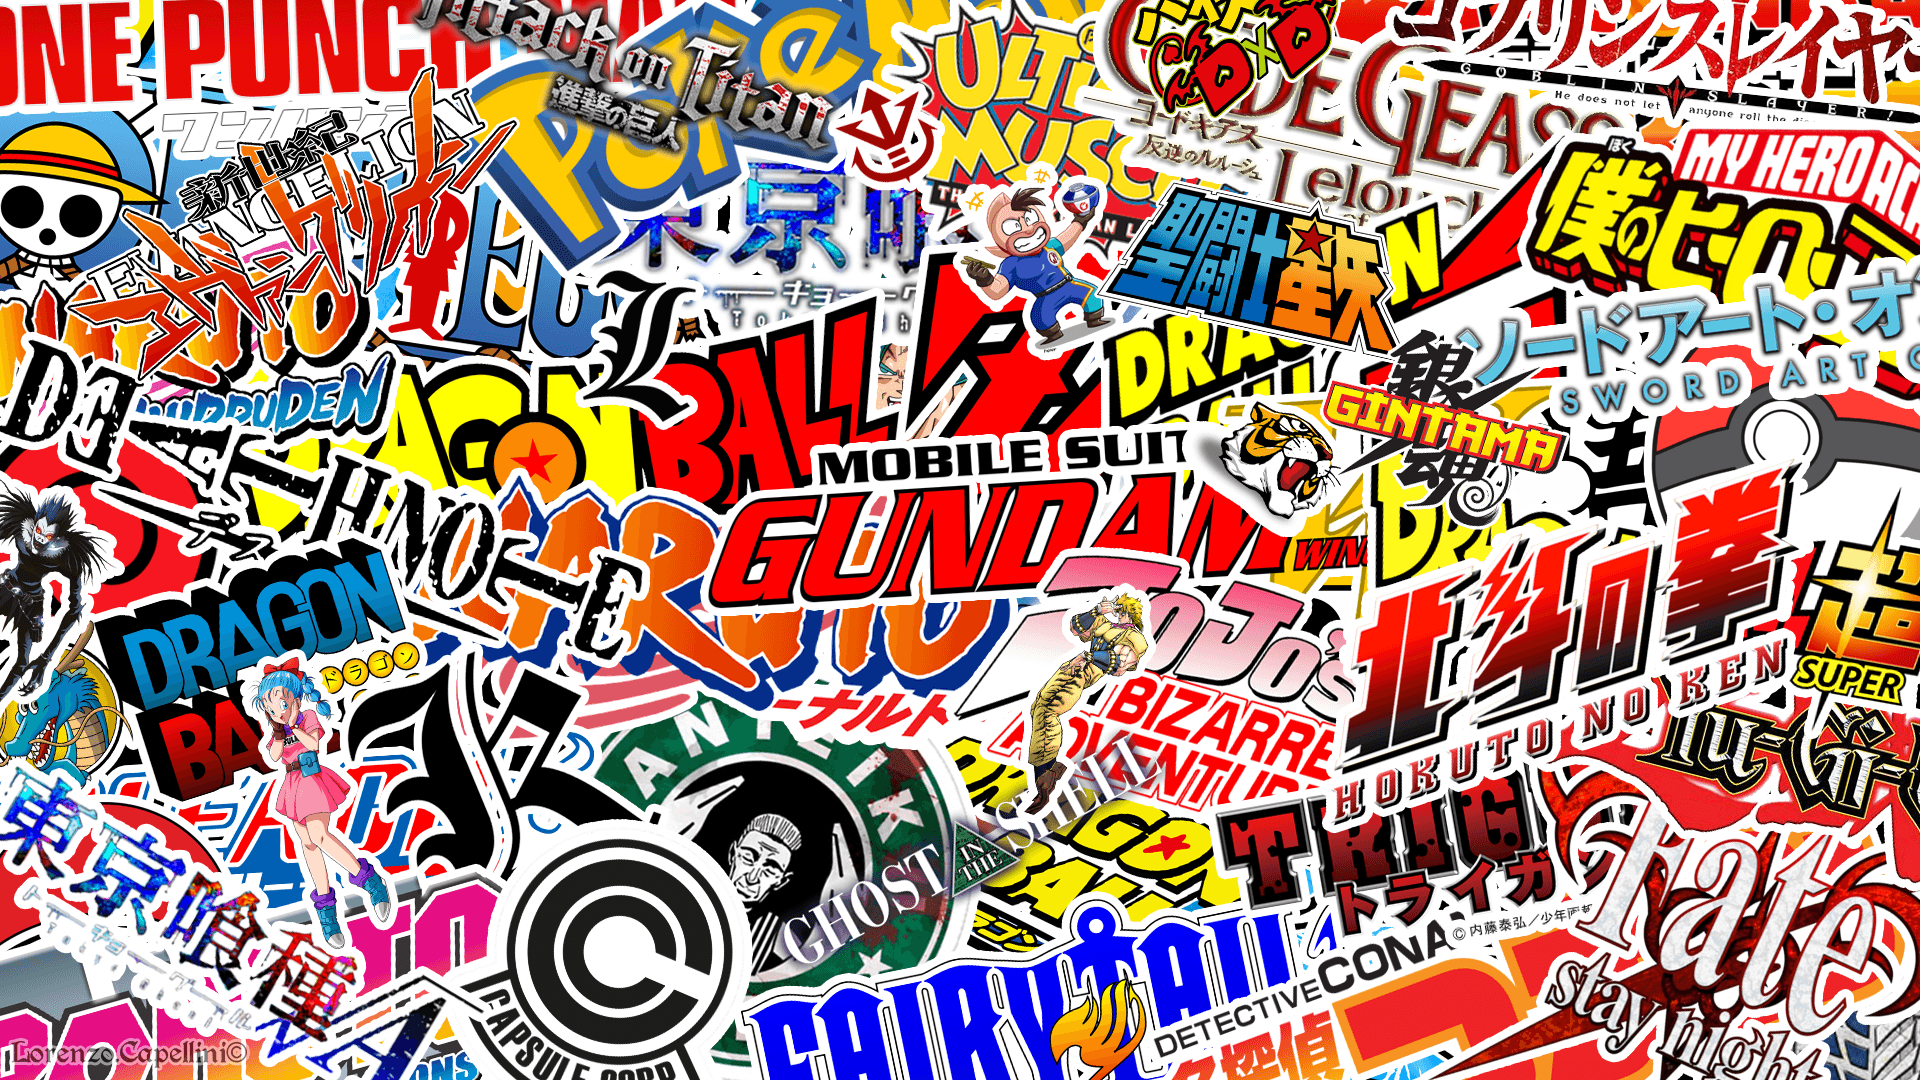 Anime logos Wallpaper sticker bomb style (1920*1080)